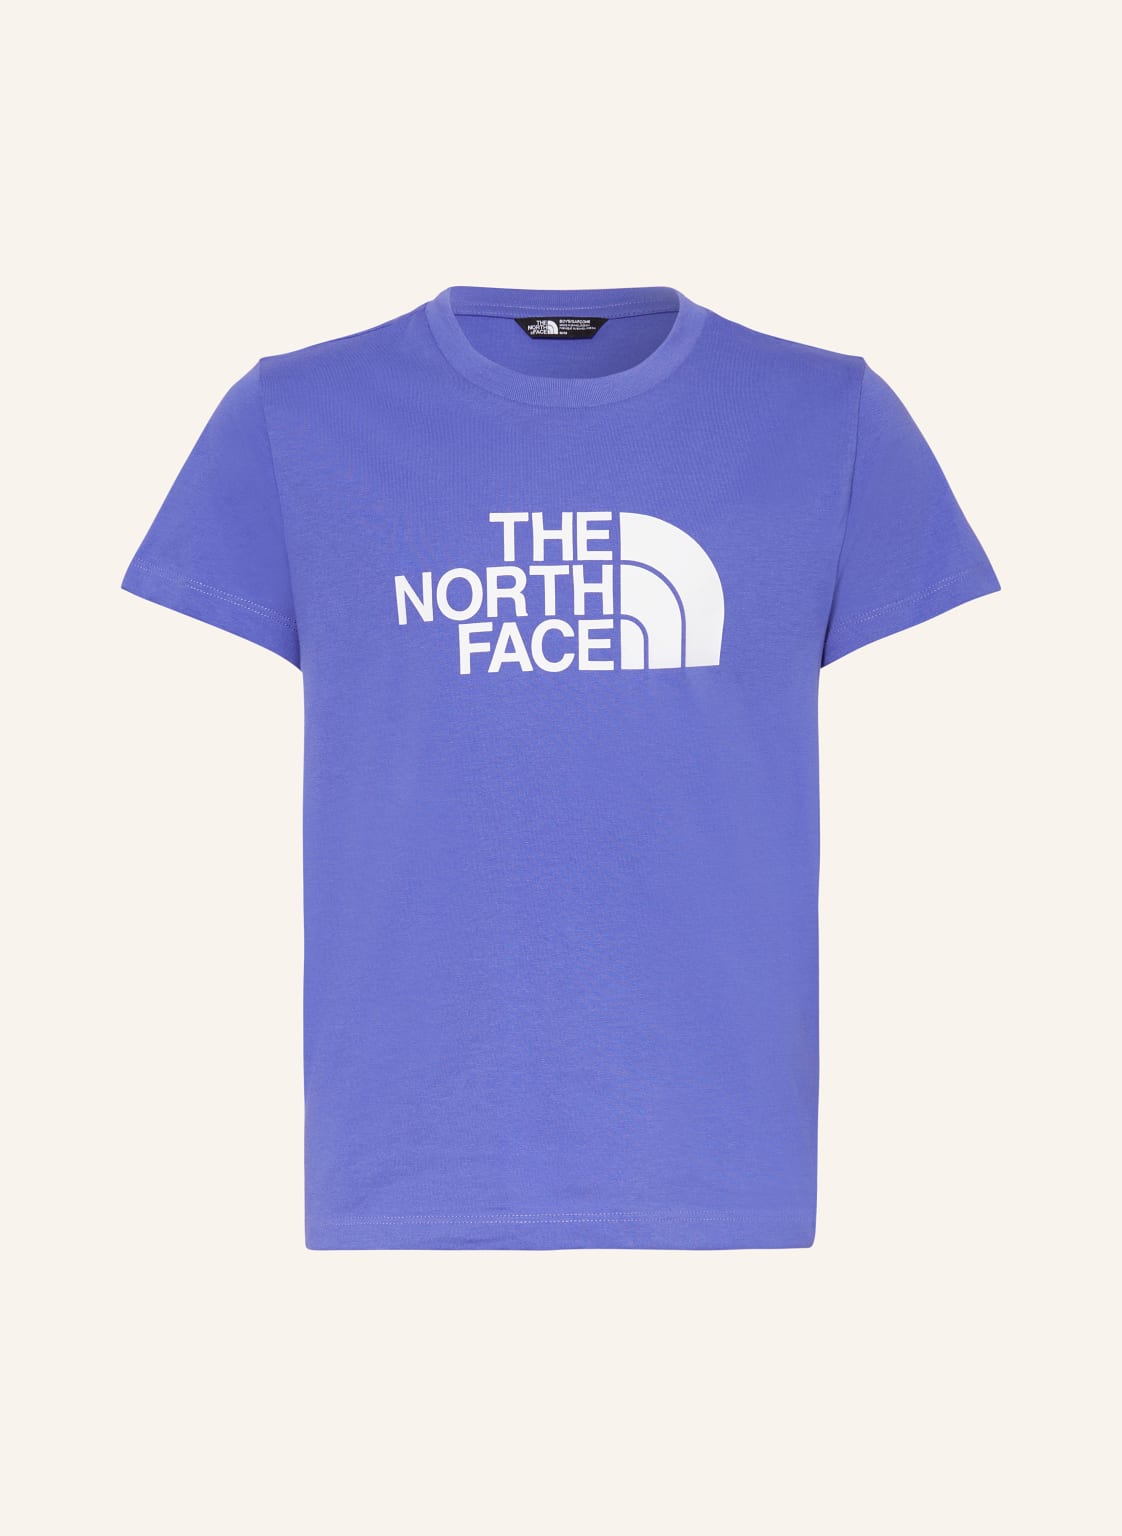 The North Face T-Shirt blau von The North Face